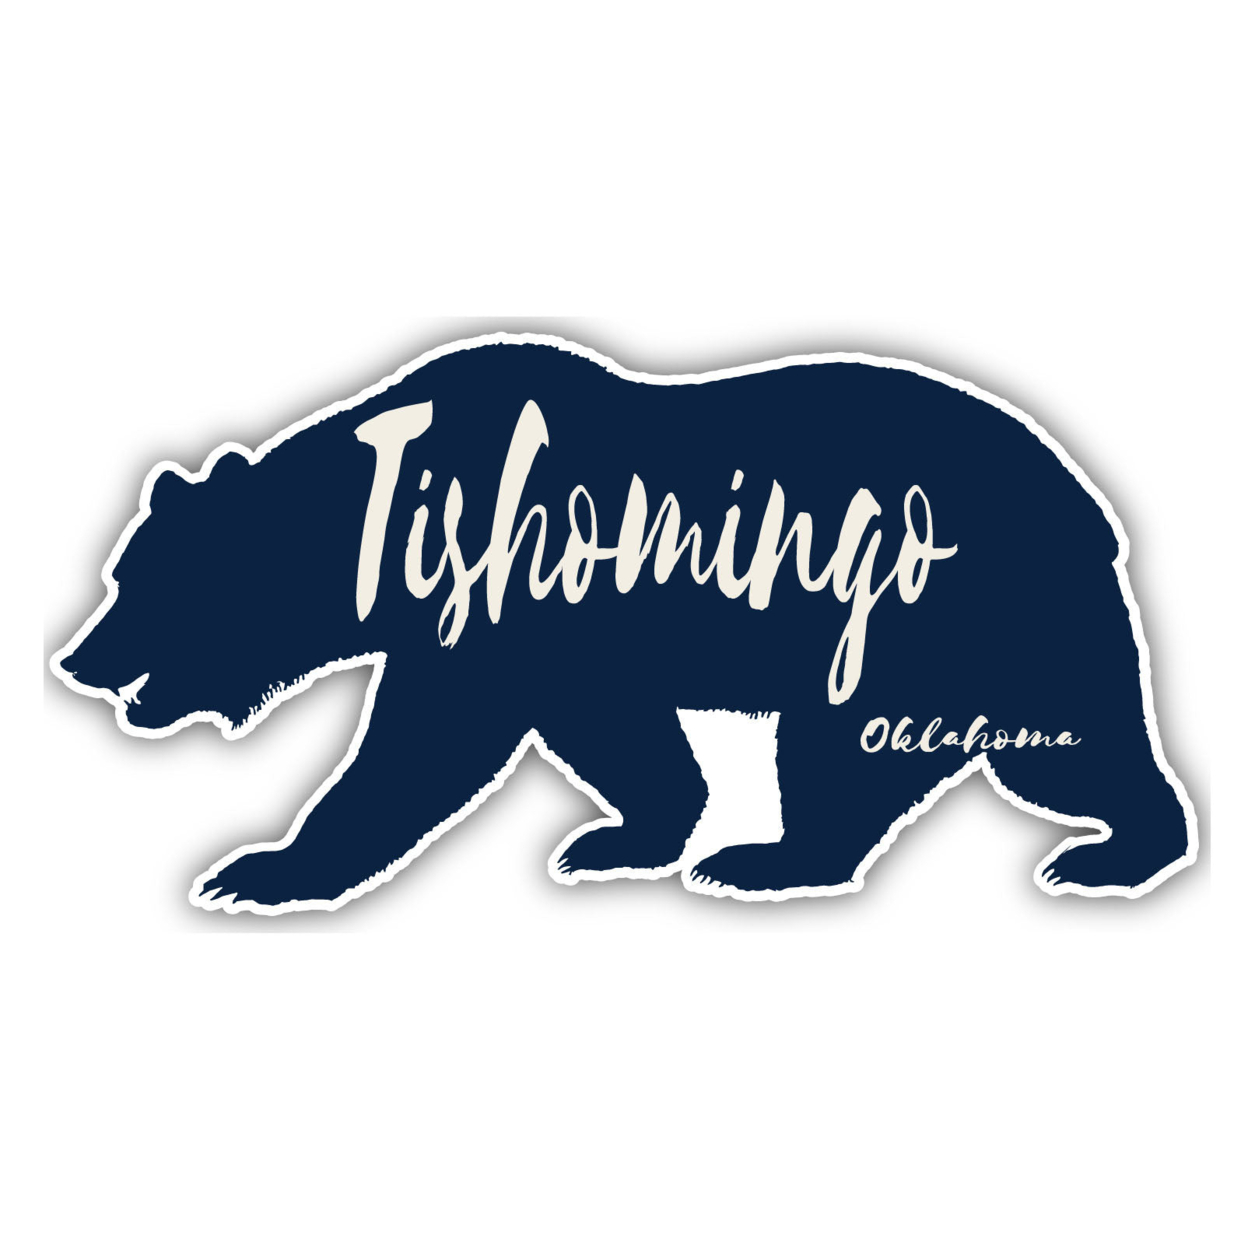 Tishomingo Oklahoma Souvenir Decorative Stickers (Choose Theme And Size) - Single Unit, 2-Inch, Great Outdoors